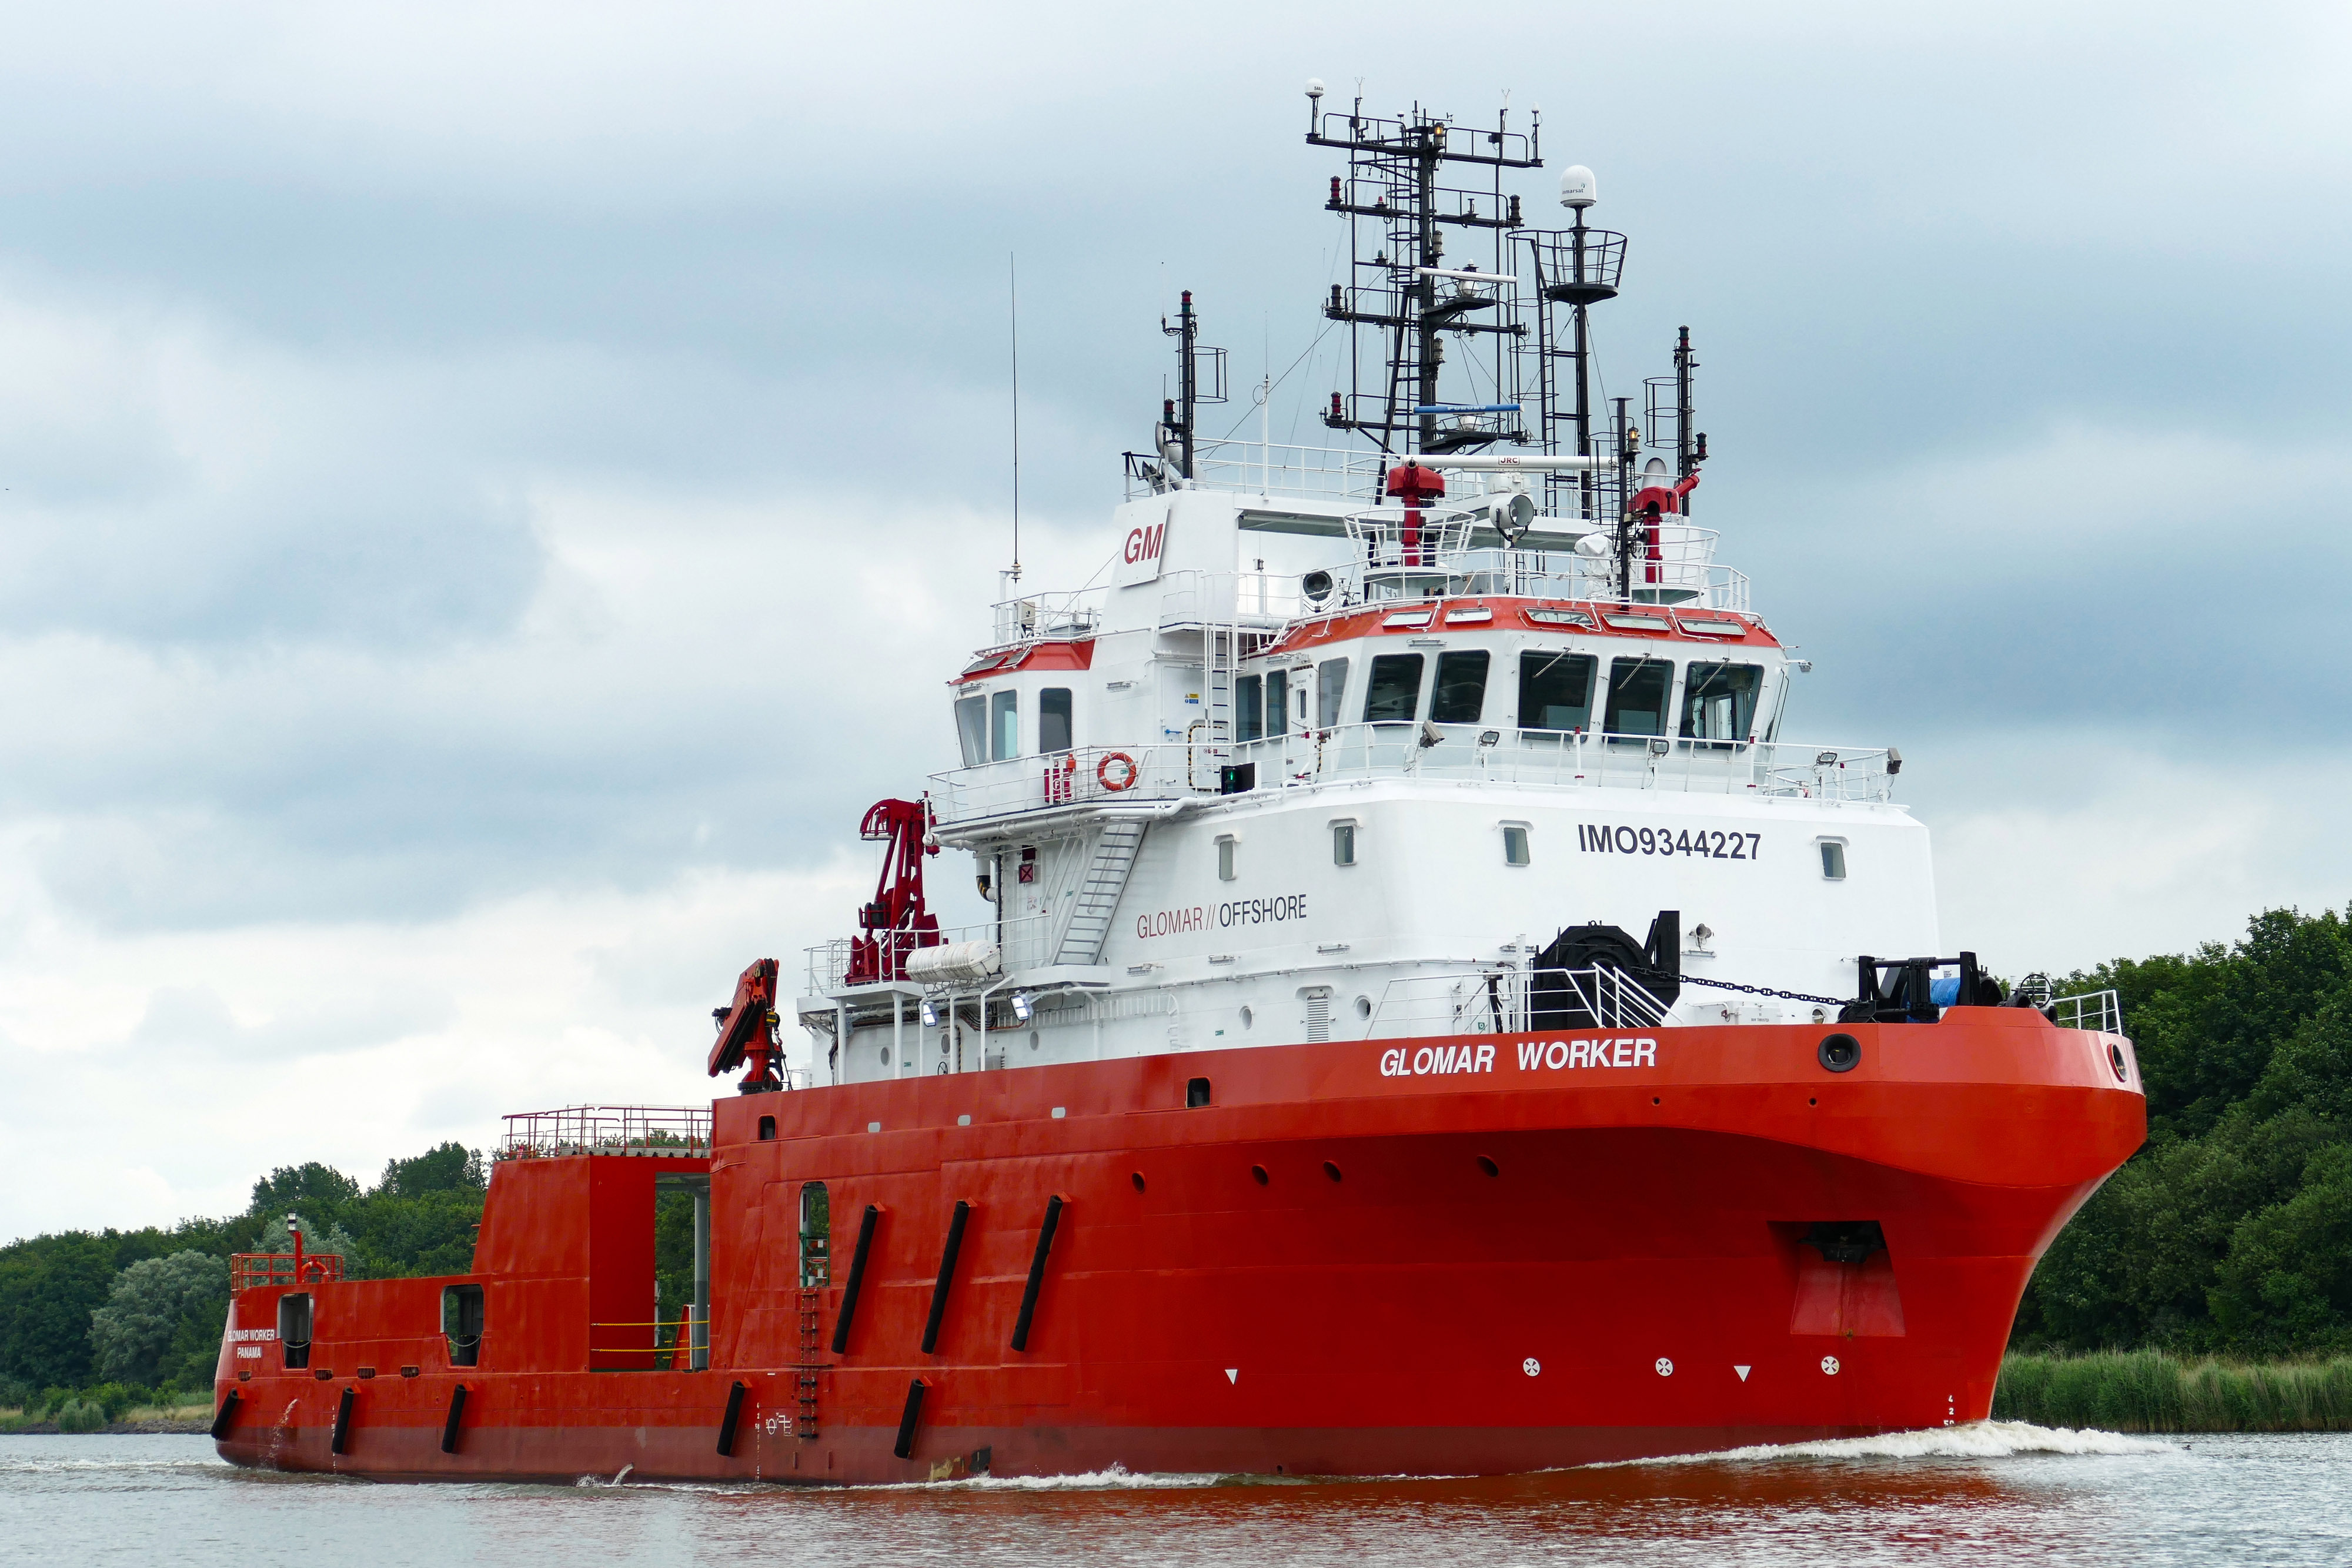 Glomar worker, Rovco grows fleet with new survey vessel